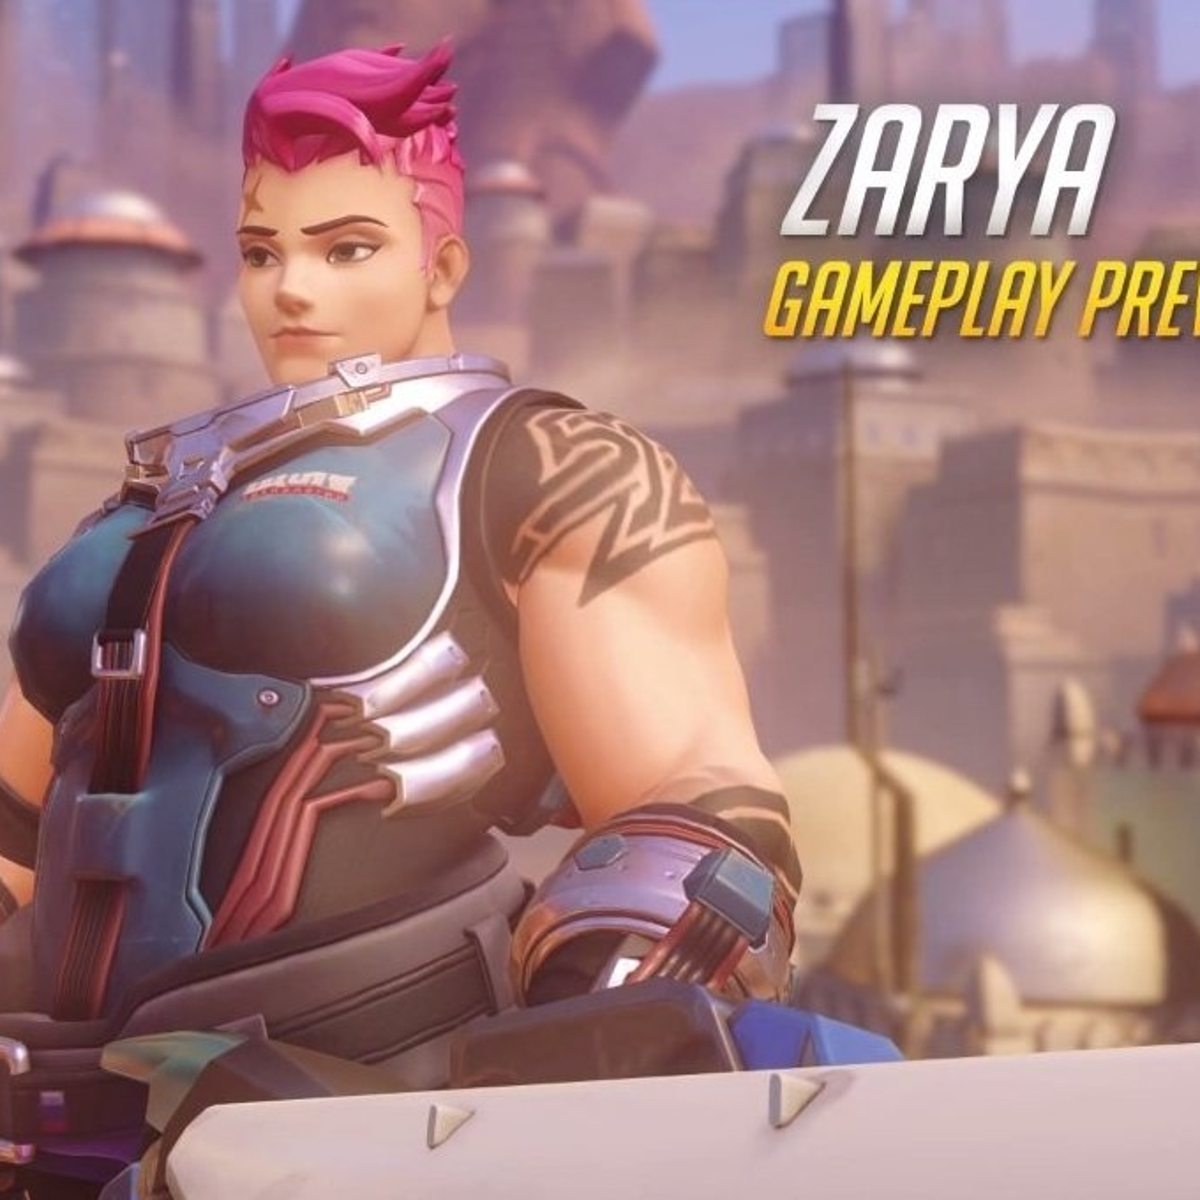 Zarya, personagem do jogo Overwatch. Fonte